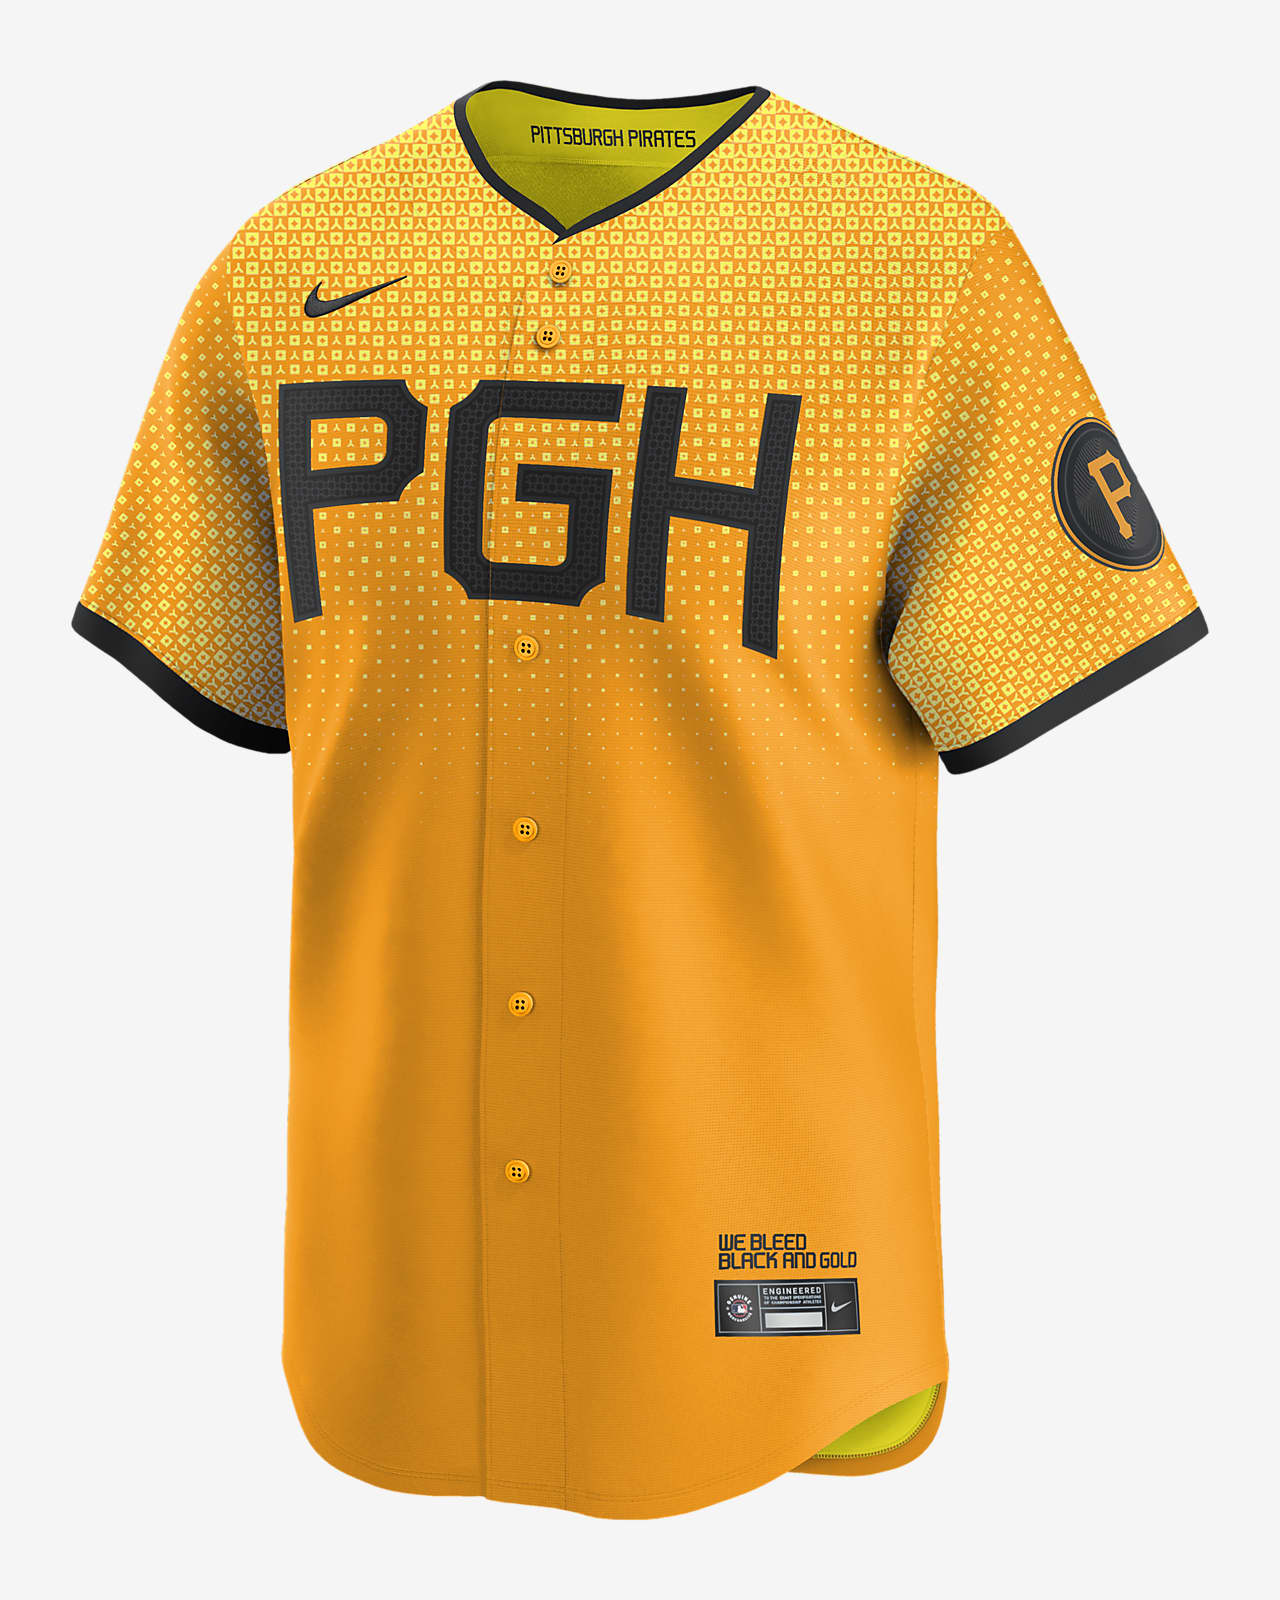 Ke'Bryan Hayes Pittsburgh Pirates City Connect Men's Nike Dri-FIT ADV MLB Limited Jersey